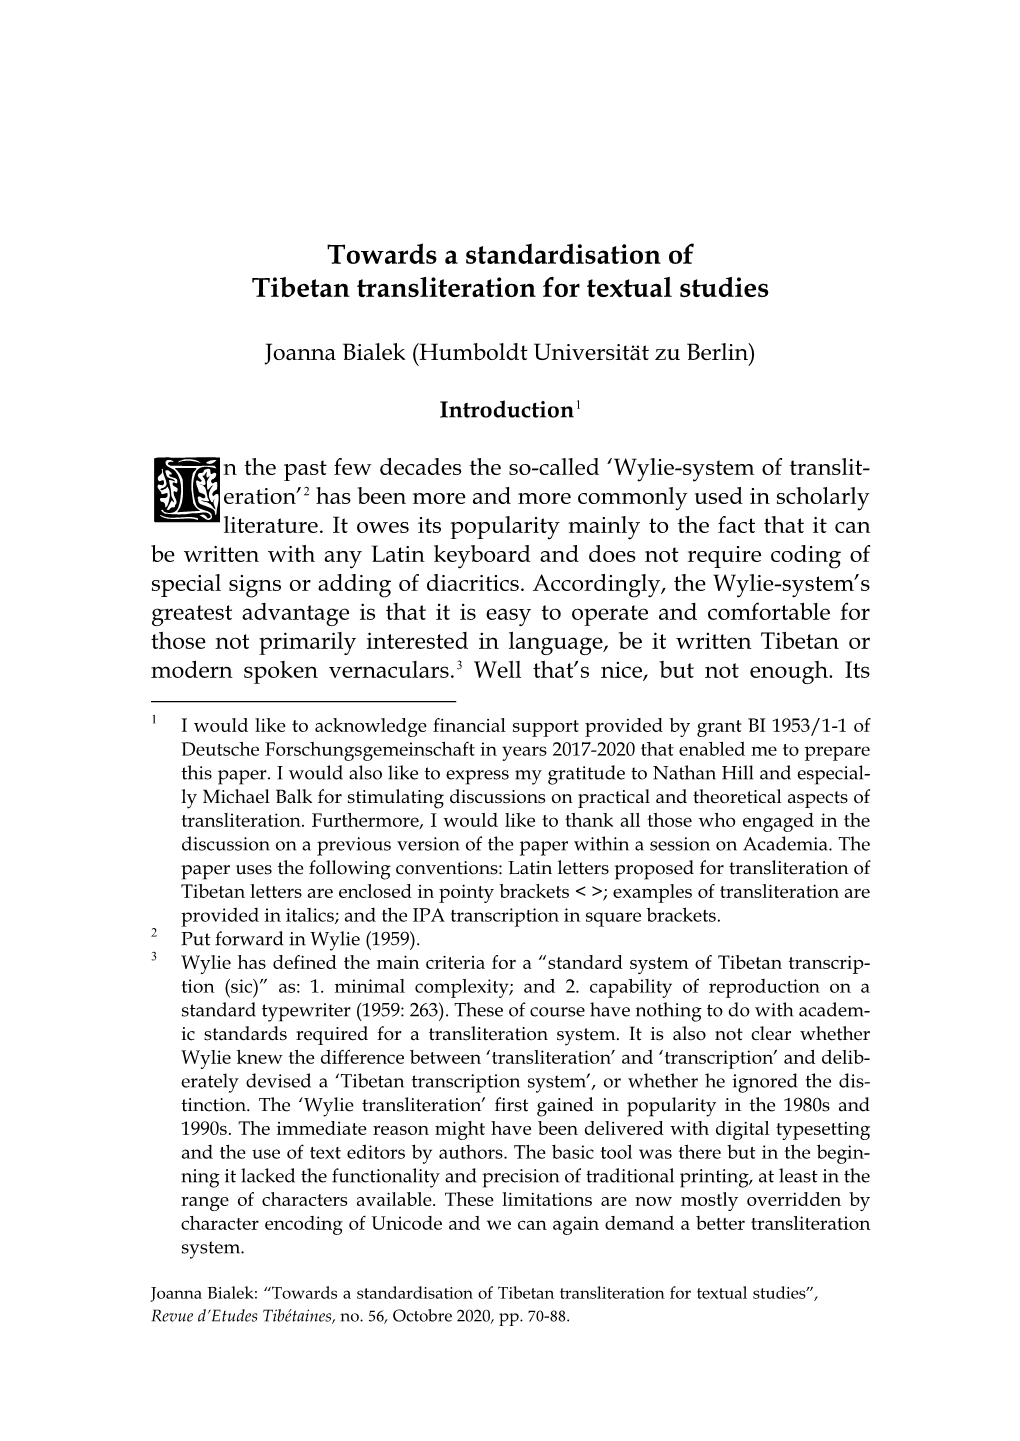 Towards a Standardisation of Tibetan Transliteration for Textual Studies